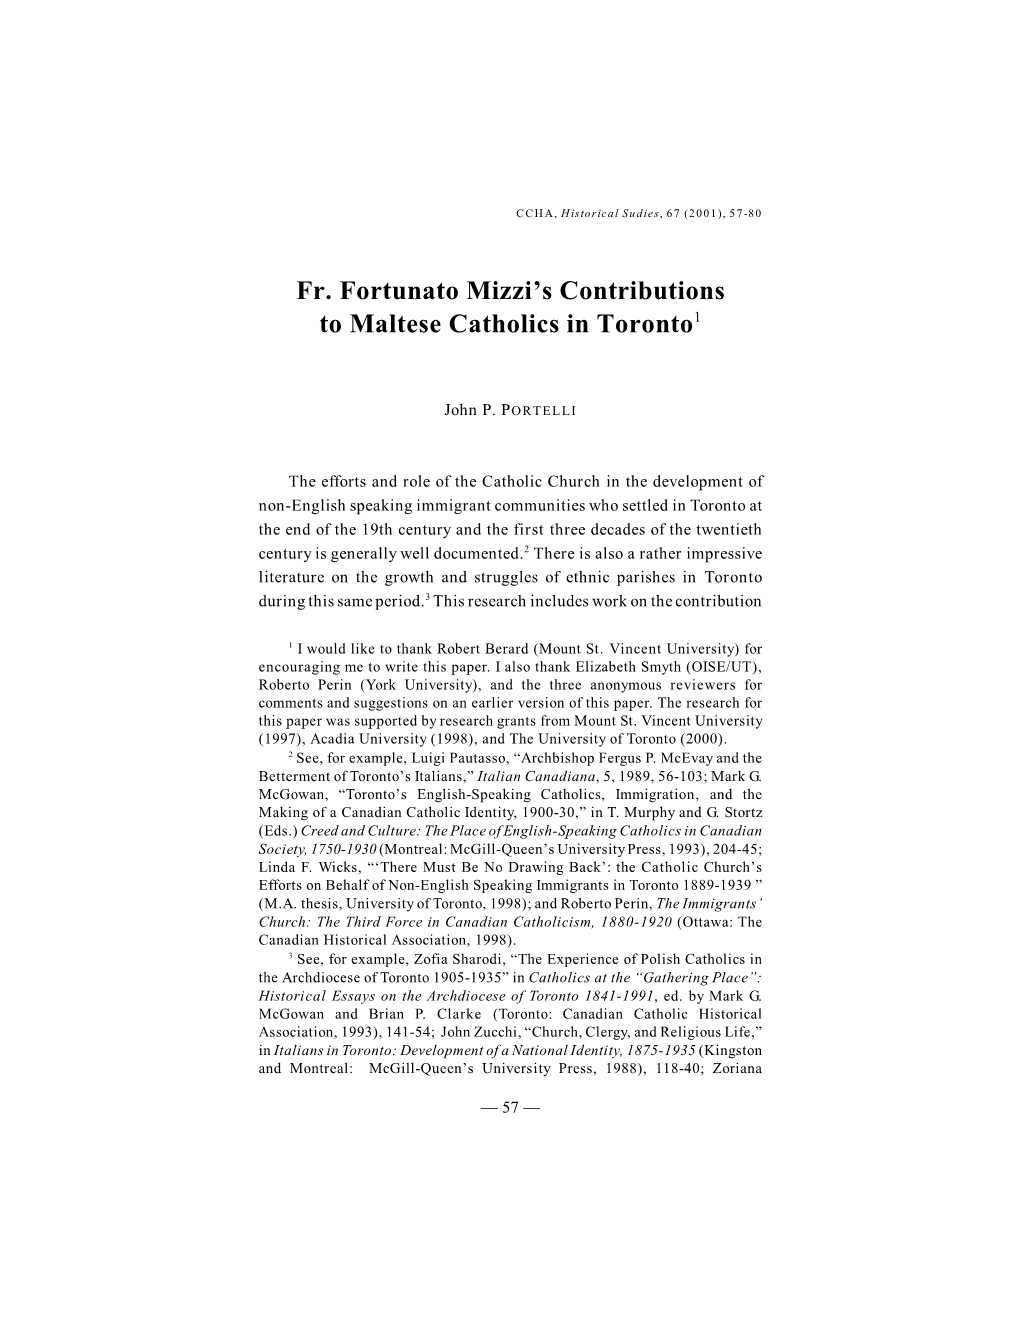 Fr. Fortunato Mizzi's Contributions to Maltese Catholics in Toronto1